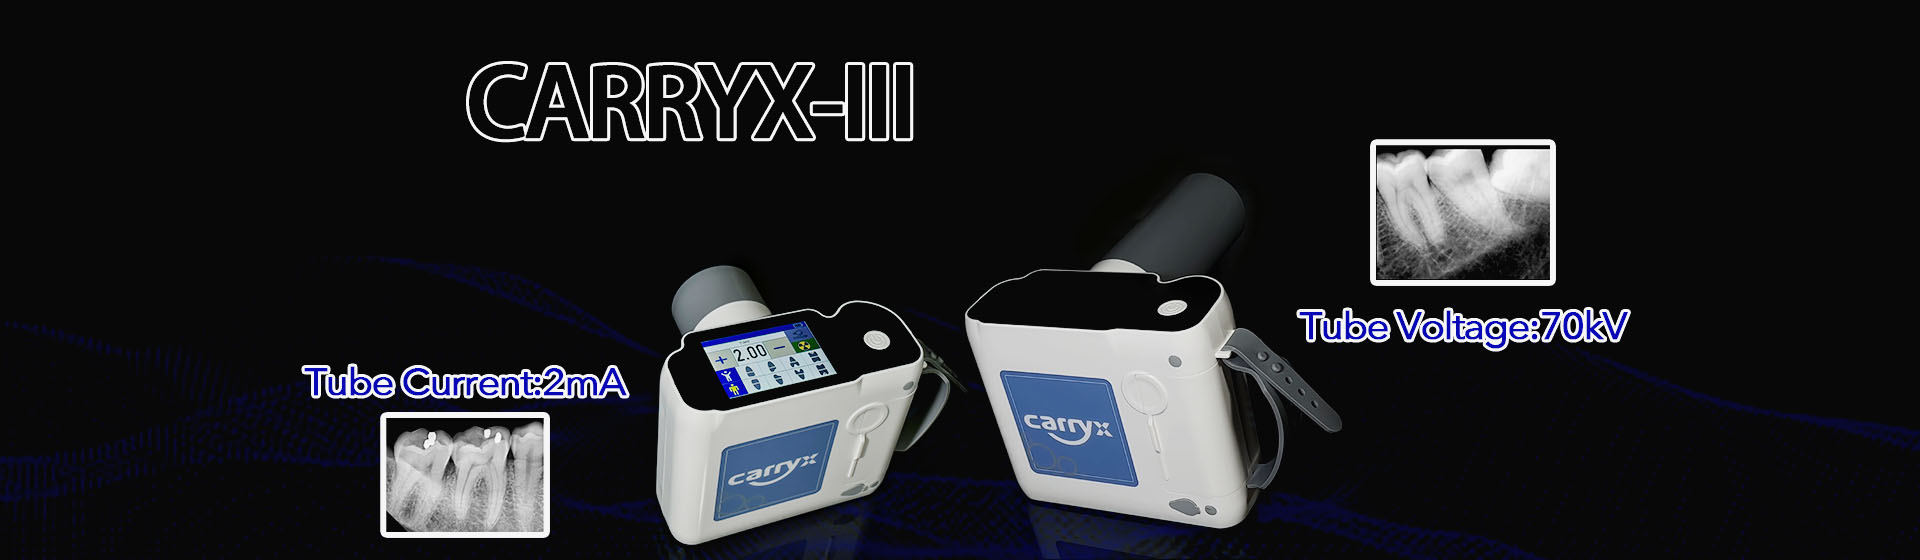 Carryx-III(2)